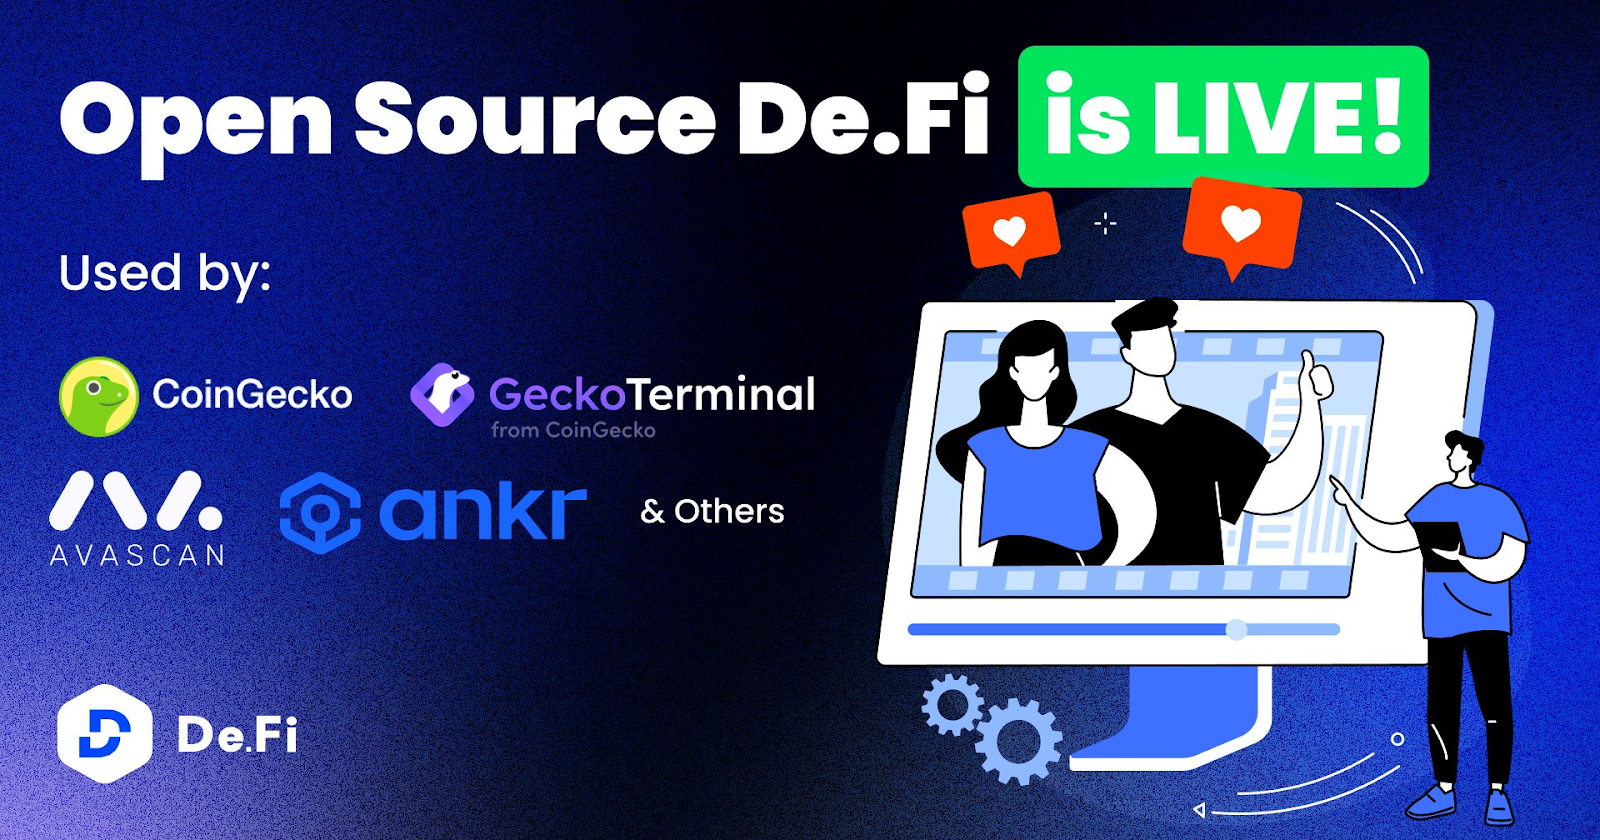 Open Source De.Fi